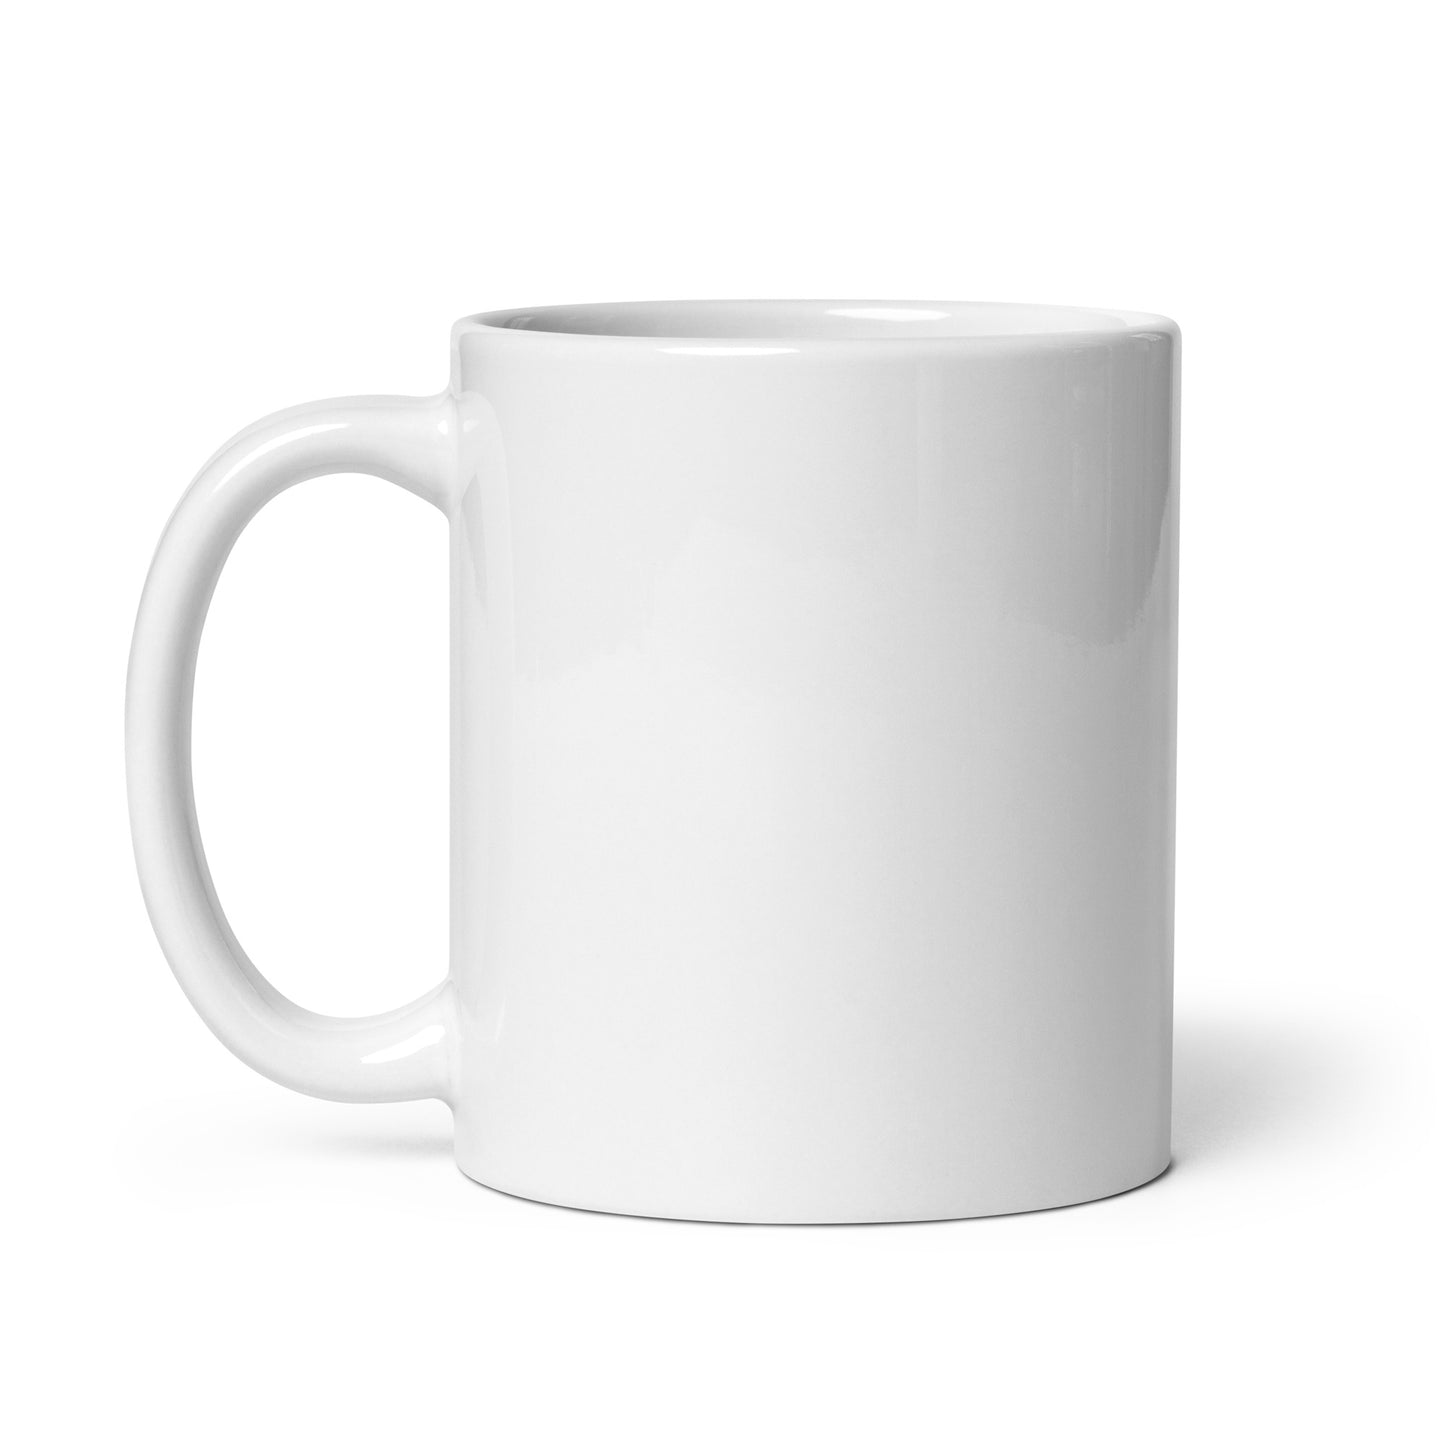 "Coffee Pulse" White Glossy Mug